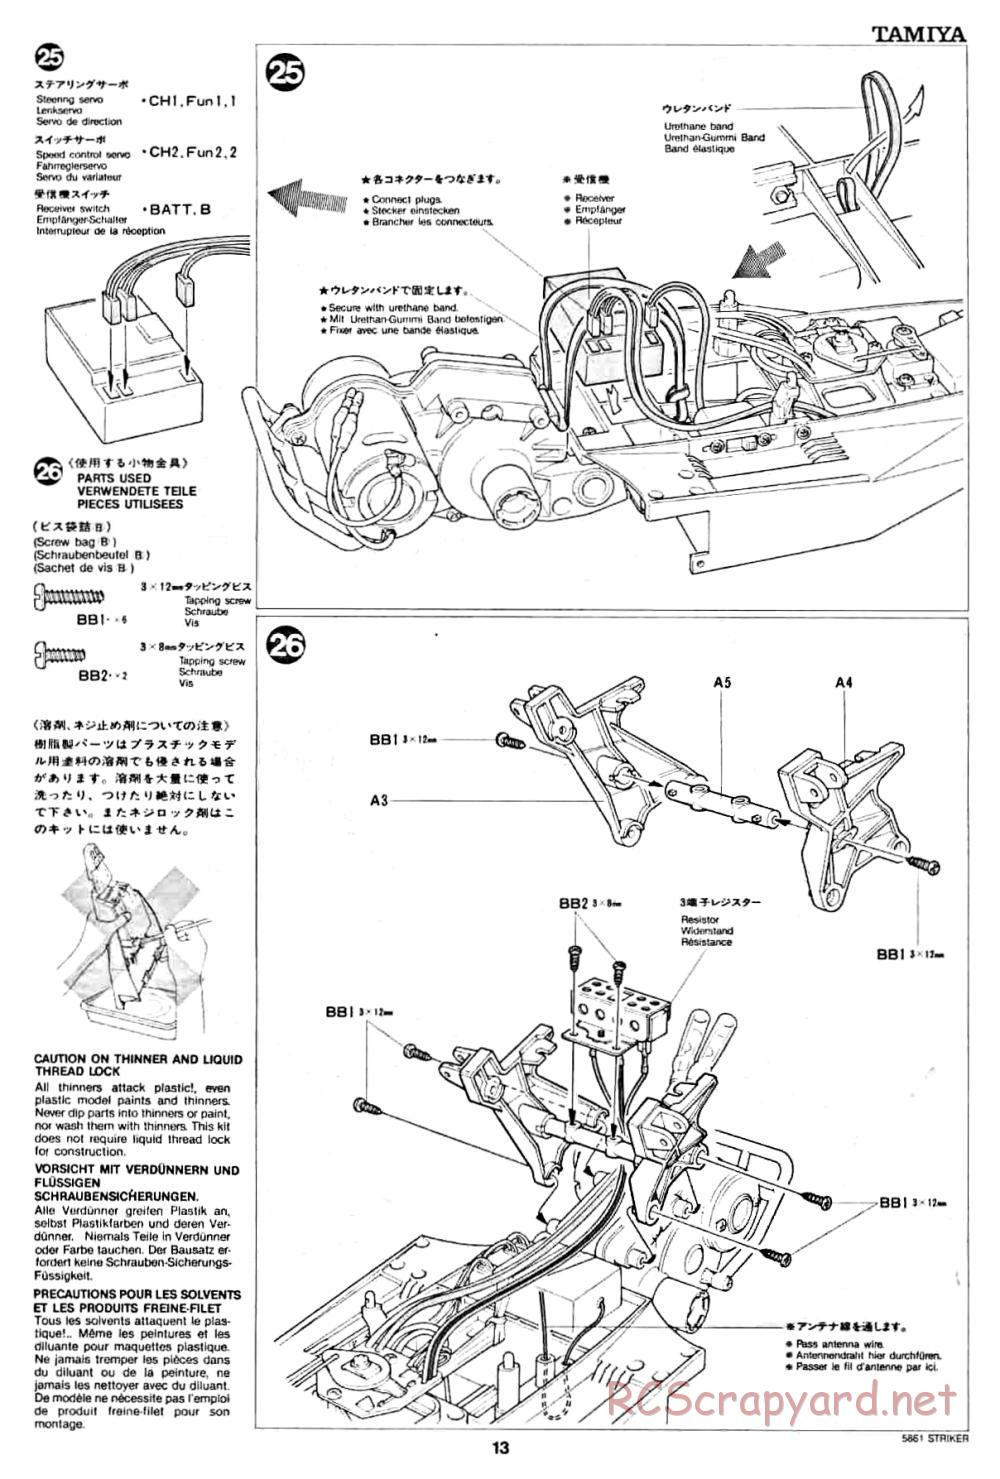 Tamiya - Striker - 58061 - Manual - Page 13